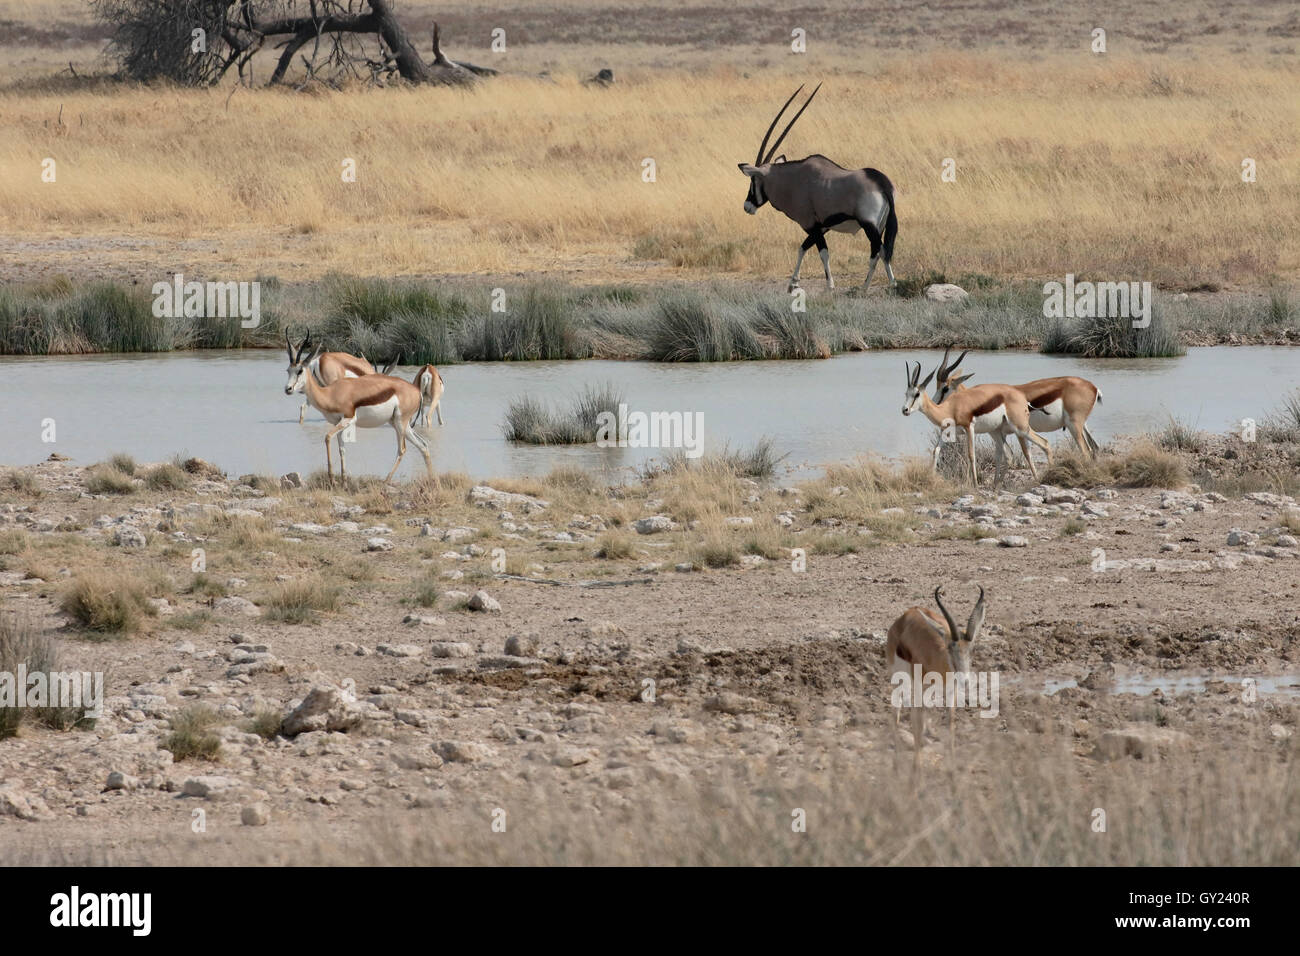 Antidorcas marsupialis, springbok, groupe, Namibie, août 2016 Banque D'Images